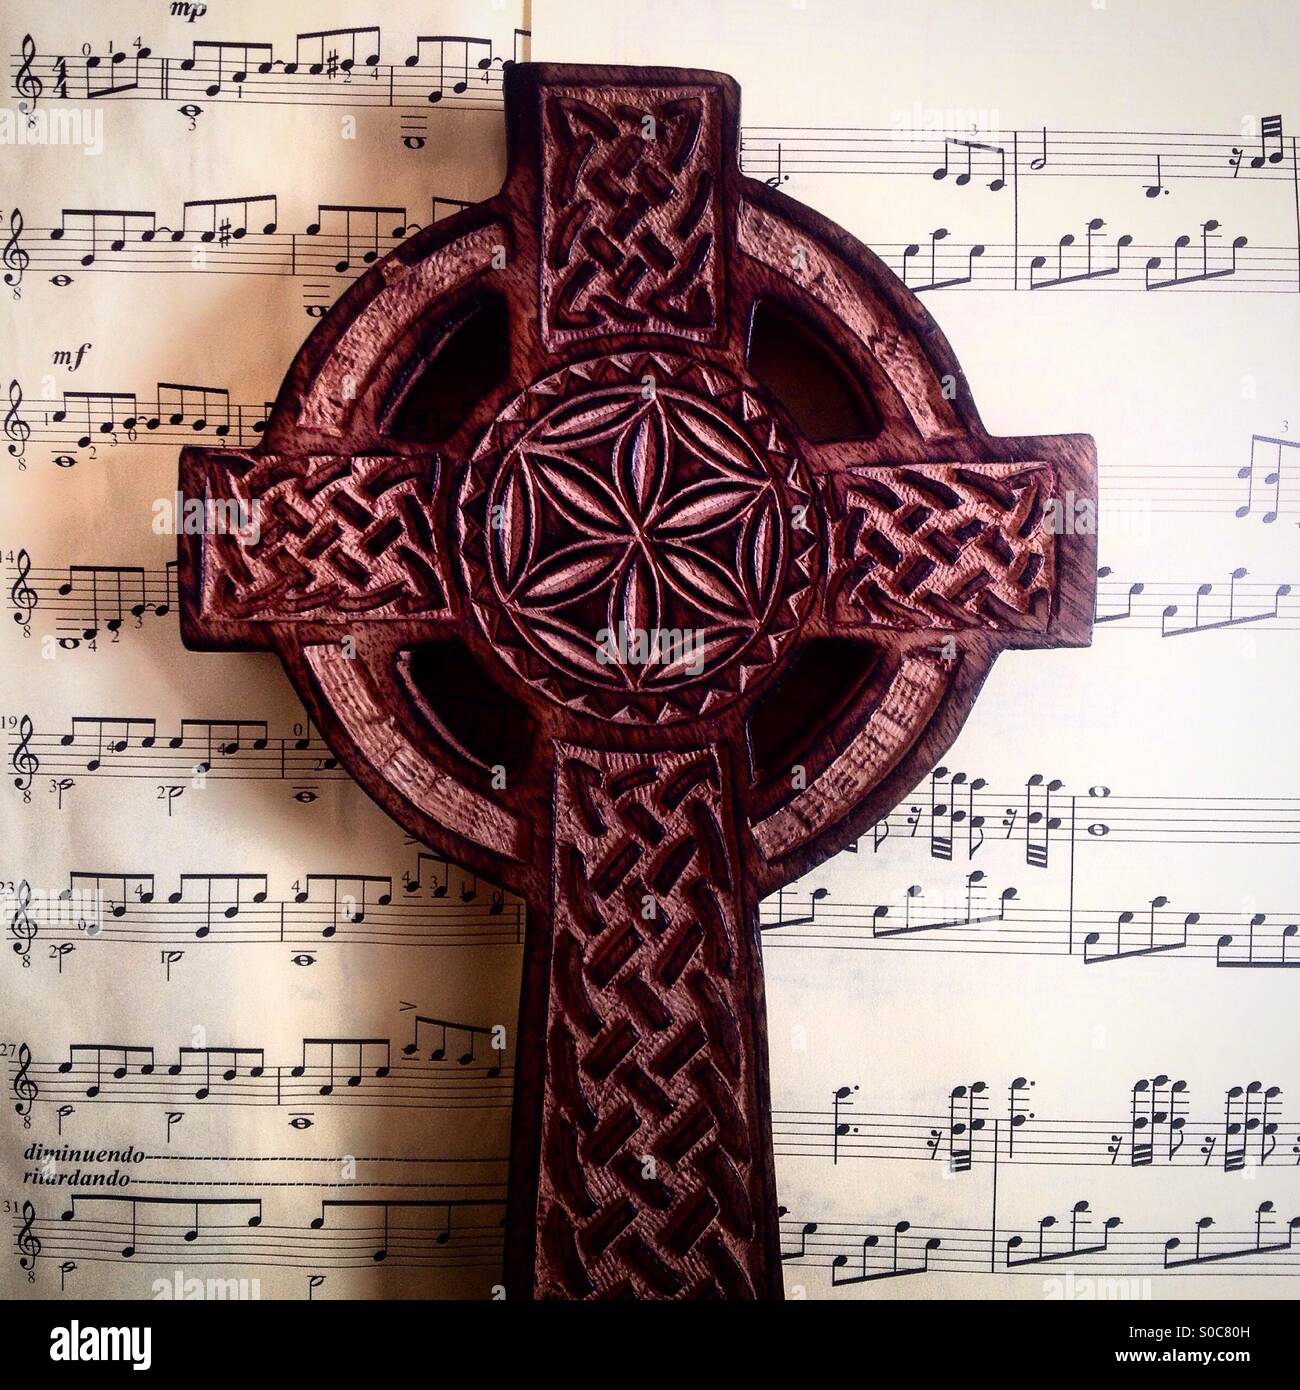 A cross inside a circle on top of musical notes in Prado del Rey, Sierra de Cadiz, Andalusia,Spain Stock Photo